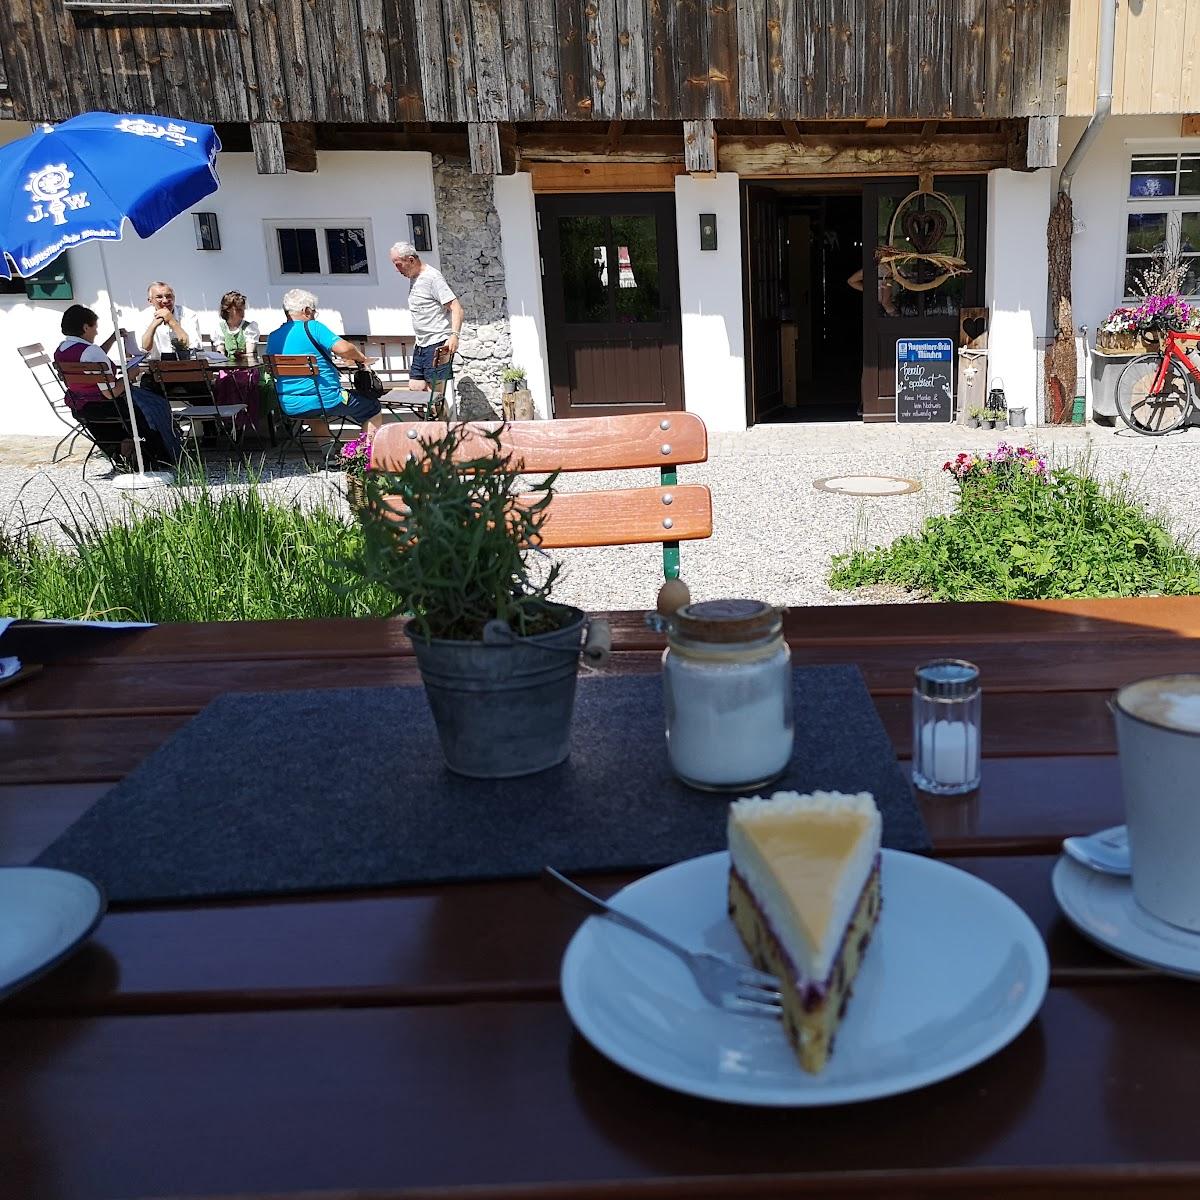 Restaurant "Lenas Café im Schusterhaus" in Kochel am See